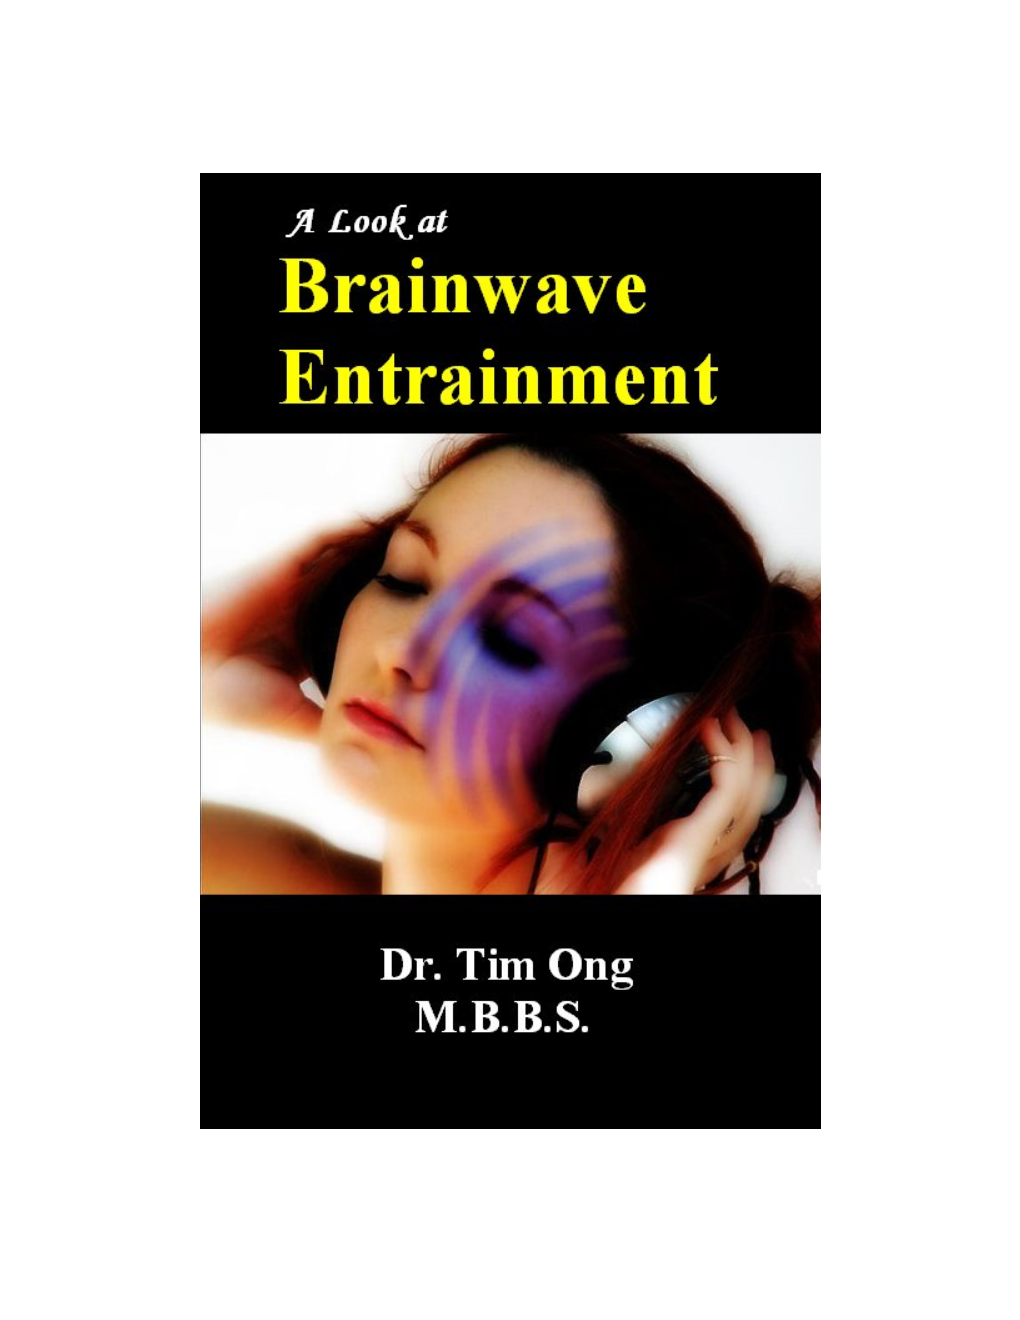 On Brainwave Entrainment